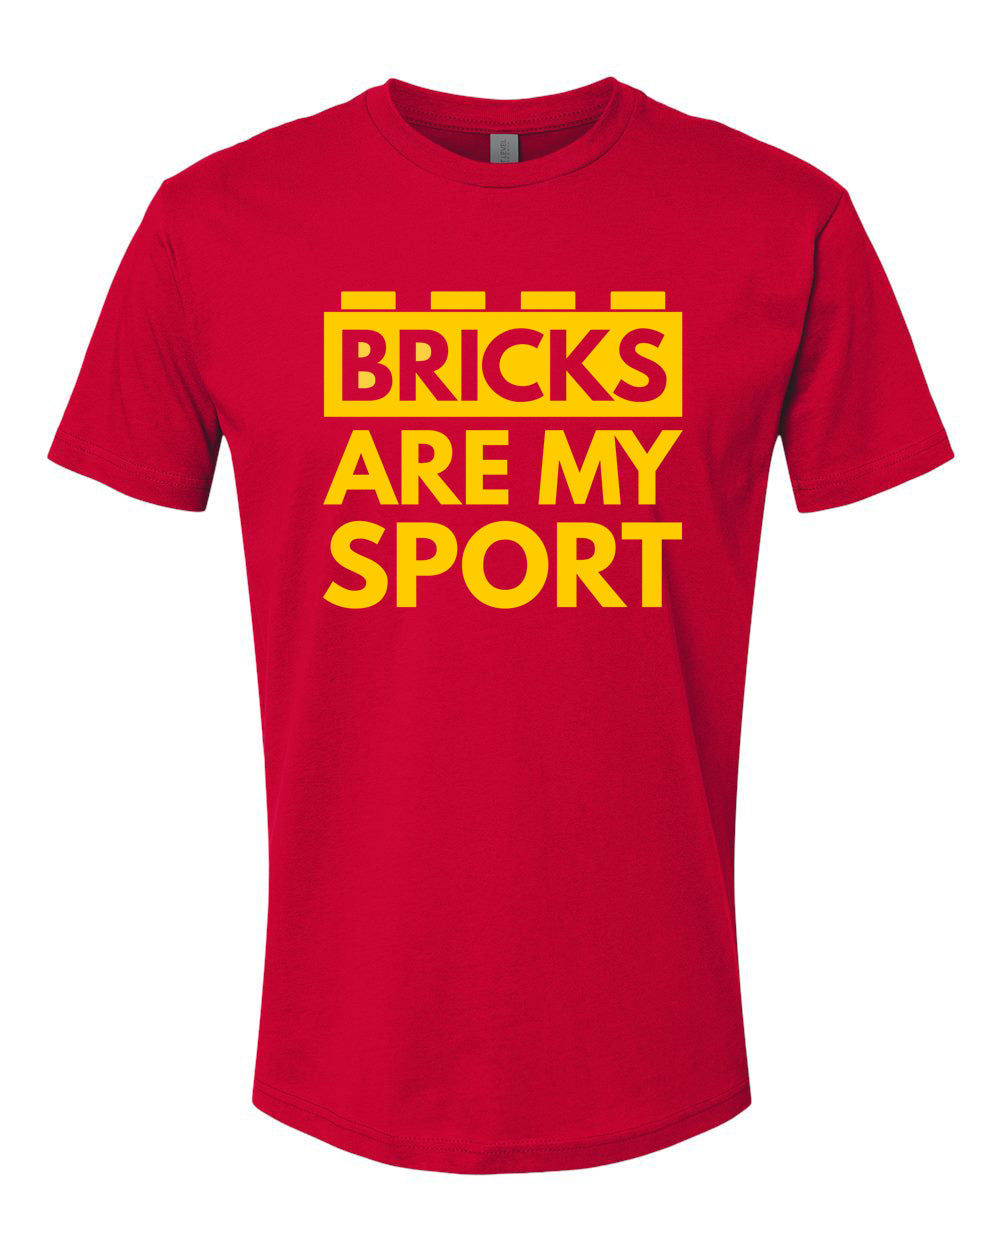 Red Short Sleeve Shirt (Beyond The Brick)